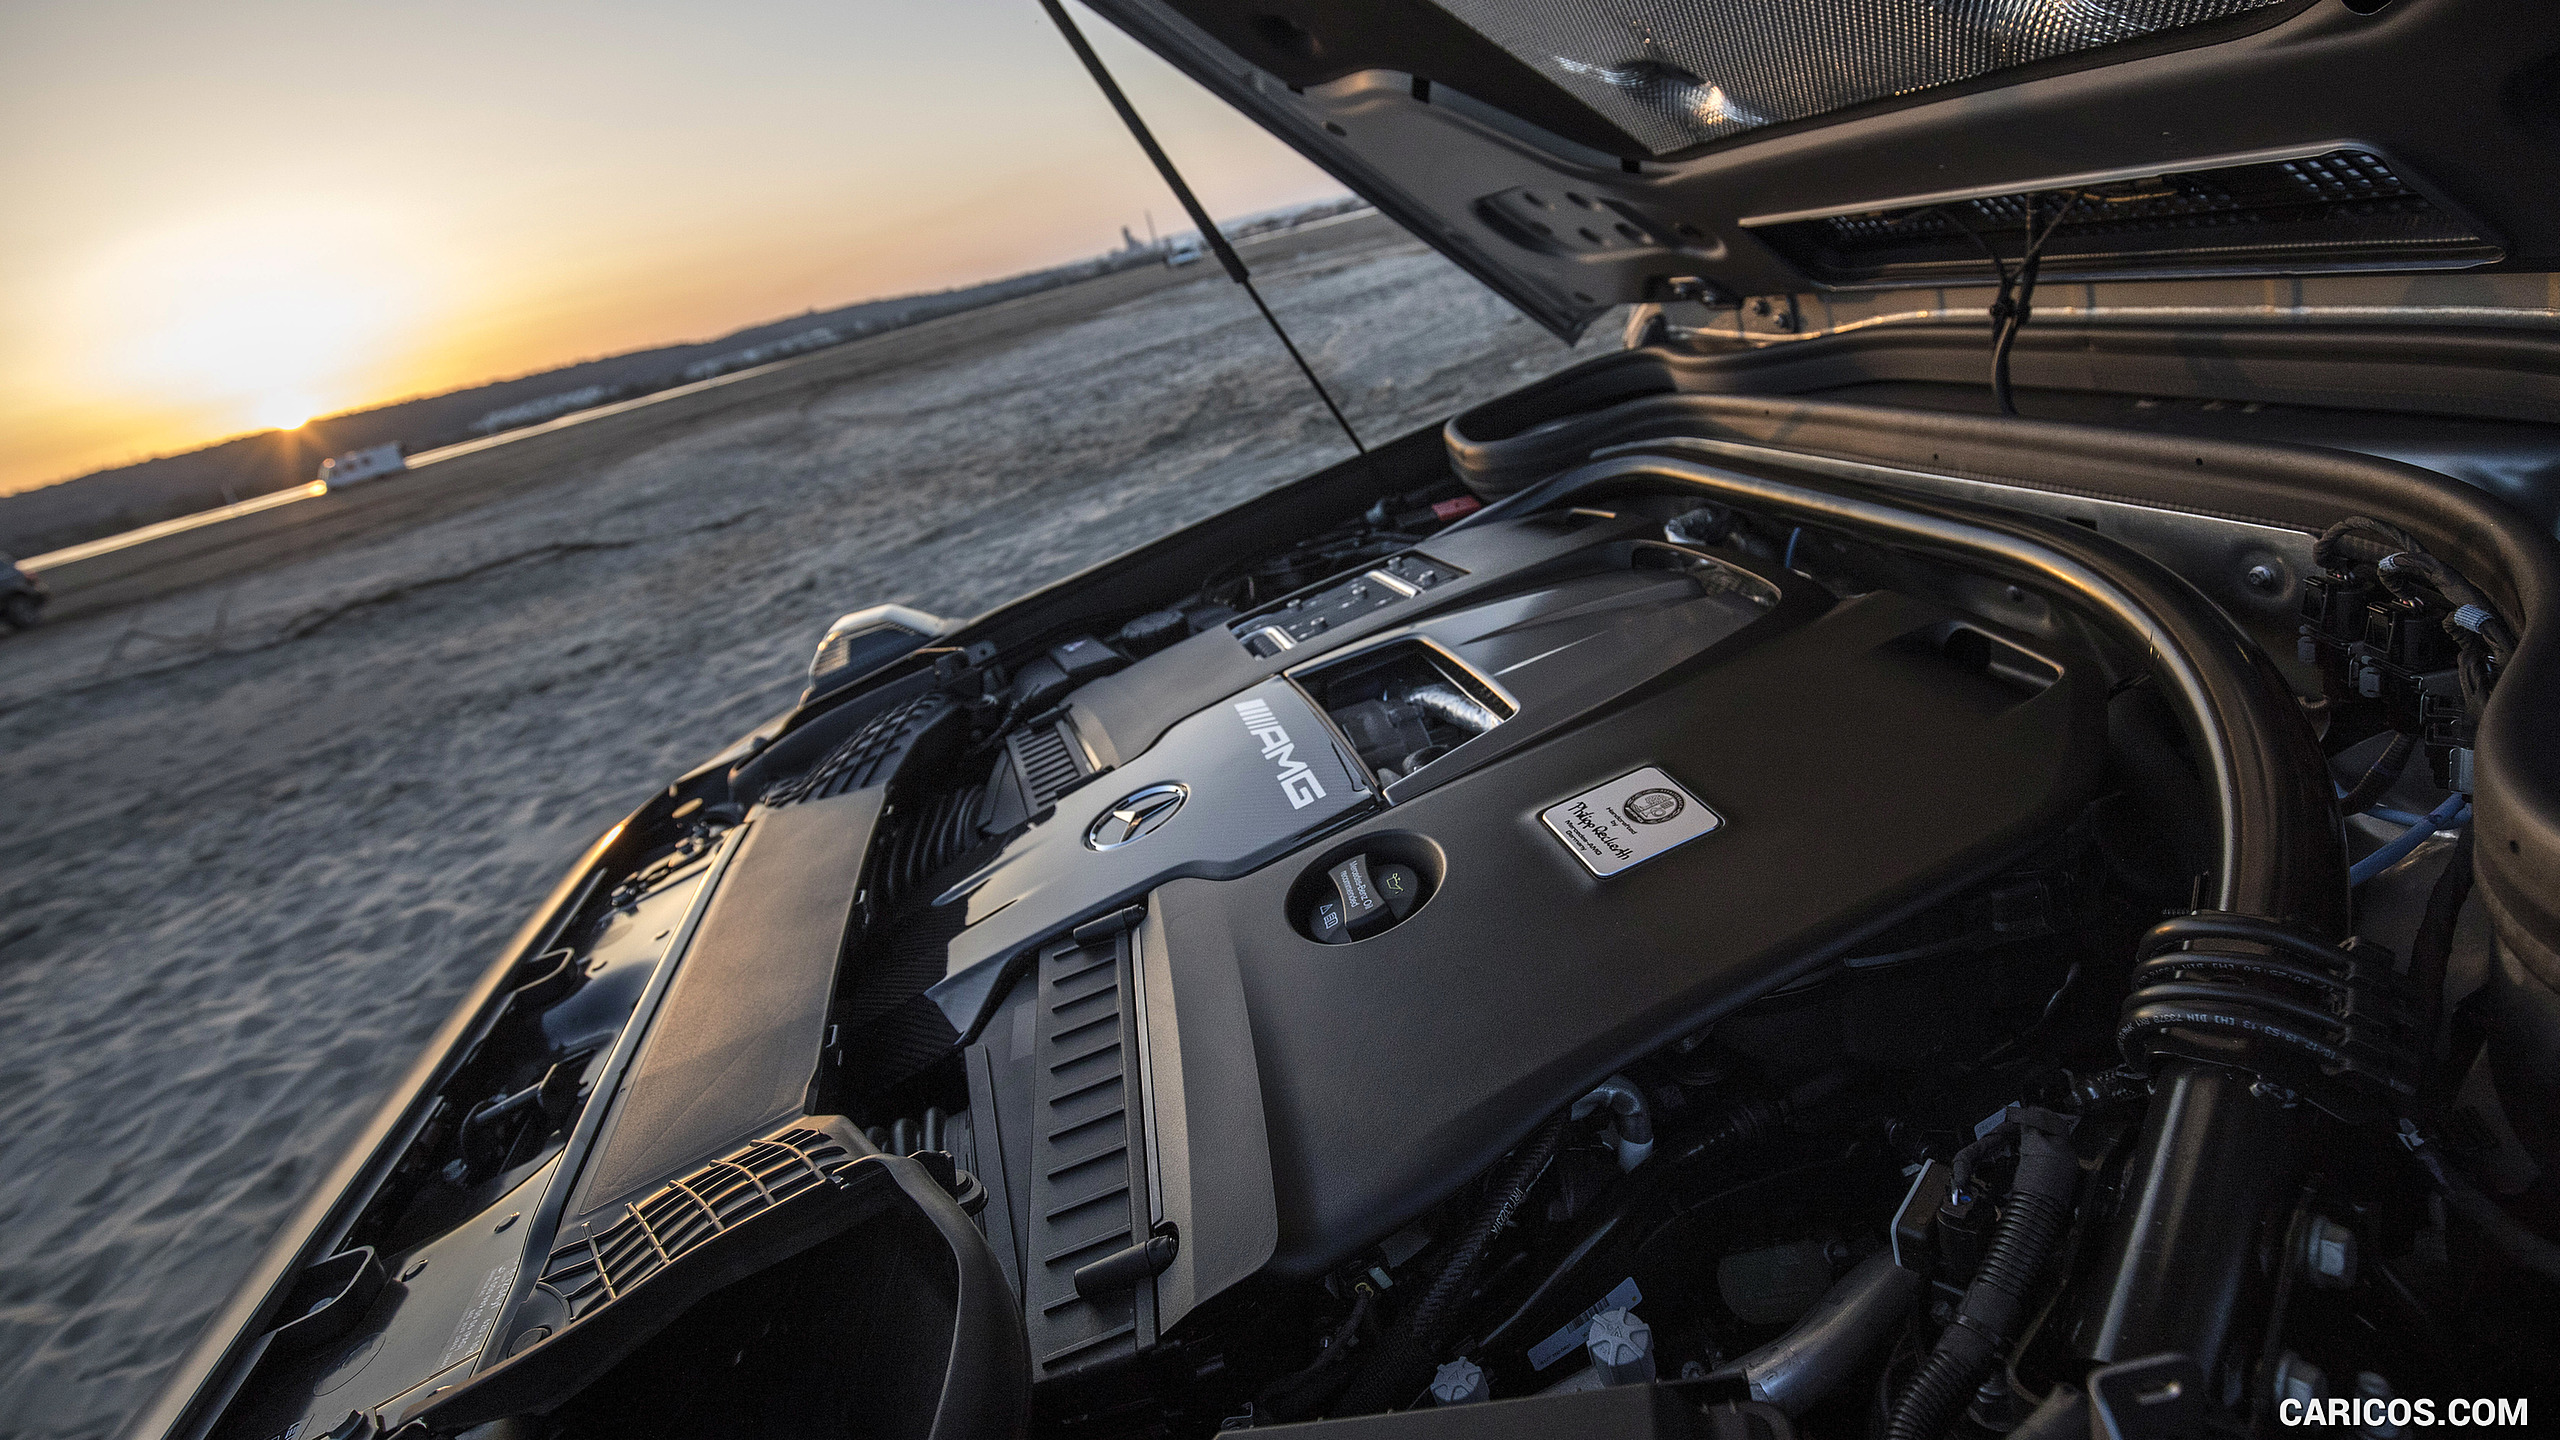 2019 Mercedes-AMG G63 - Engine, #188 of 452